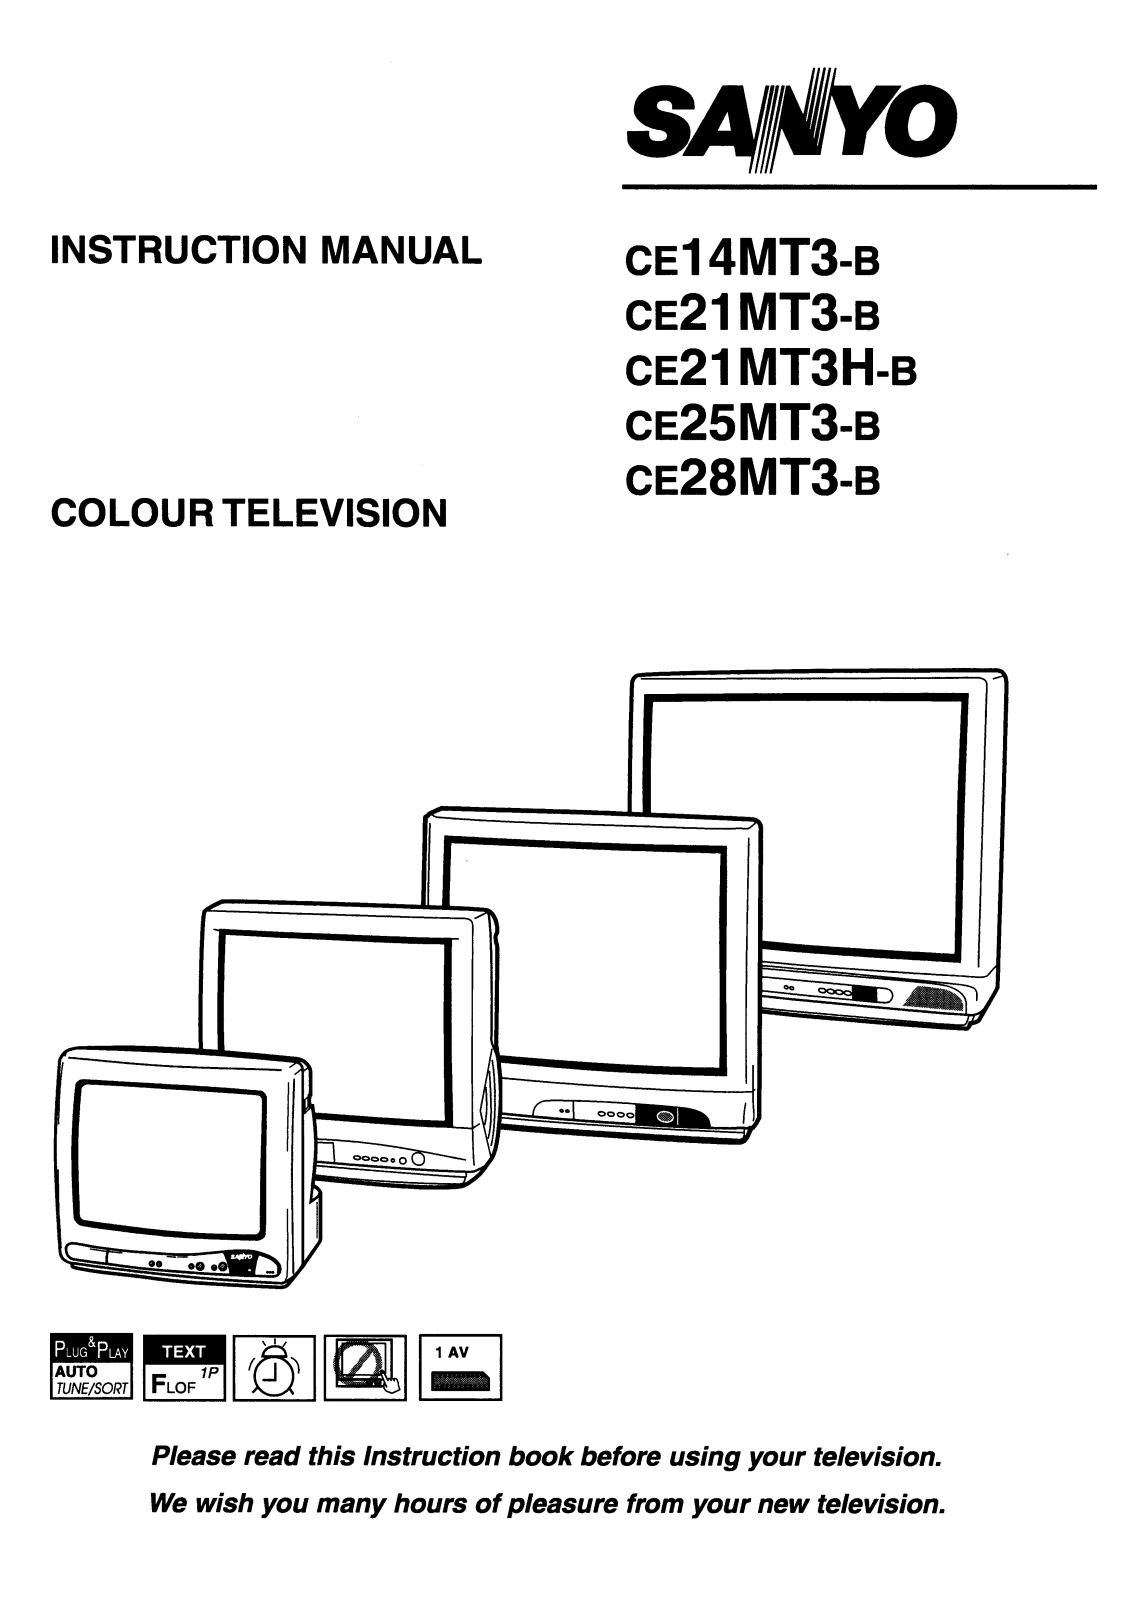 Sanyo CE21MT3-B, CE21MT3H-B, CE25MT3-B, CE28MT3-B Instruction Manual